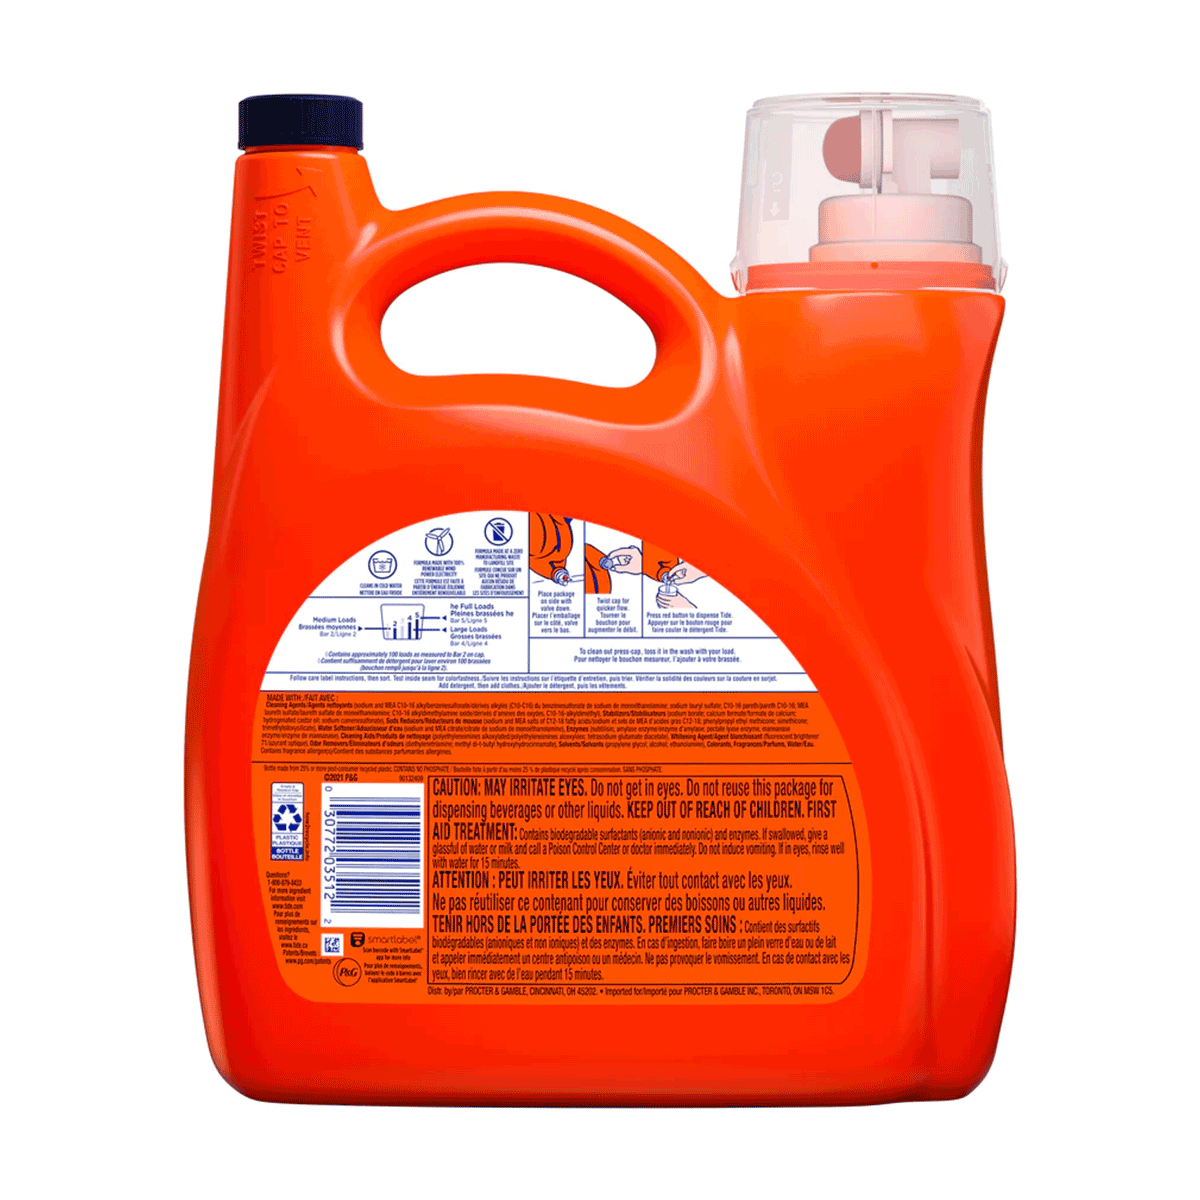 Desinfectante para ropa SANYTOL botella 500 ml - New Power International